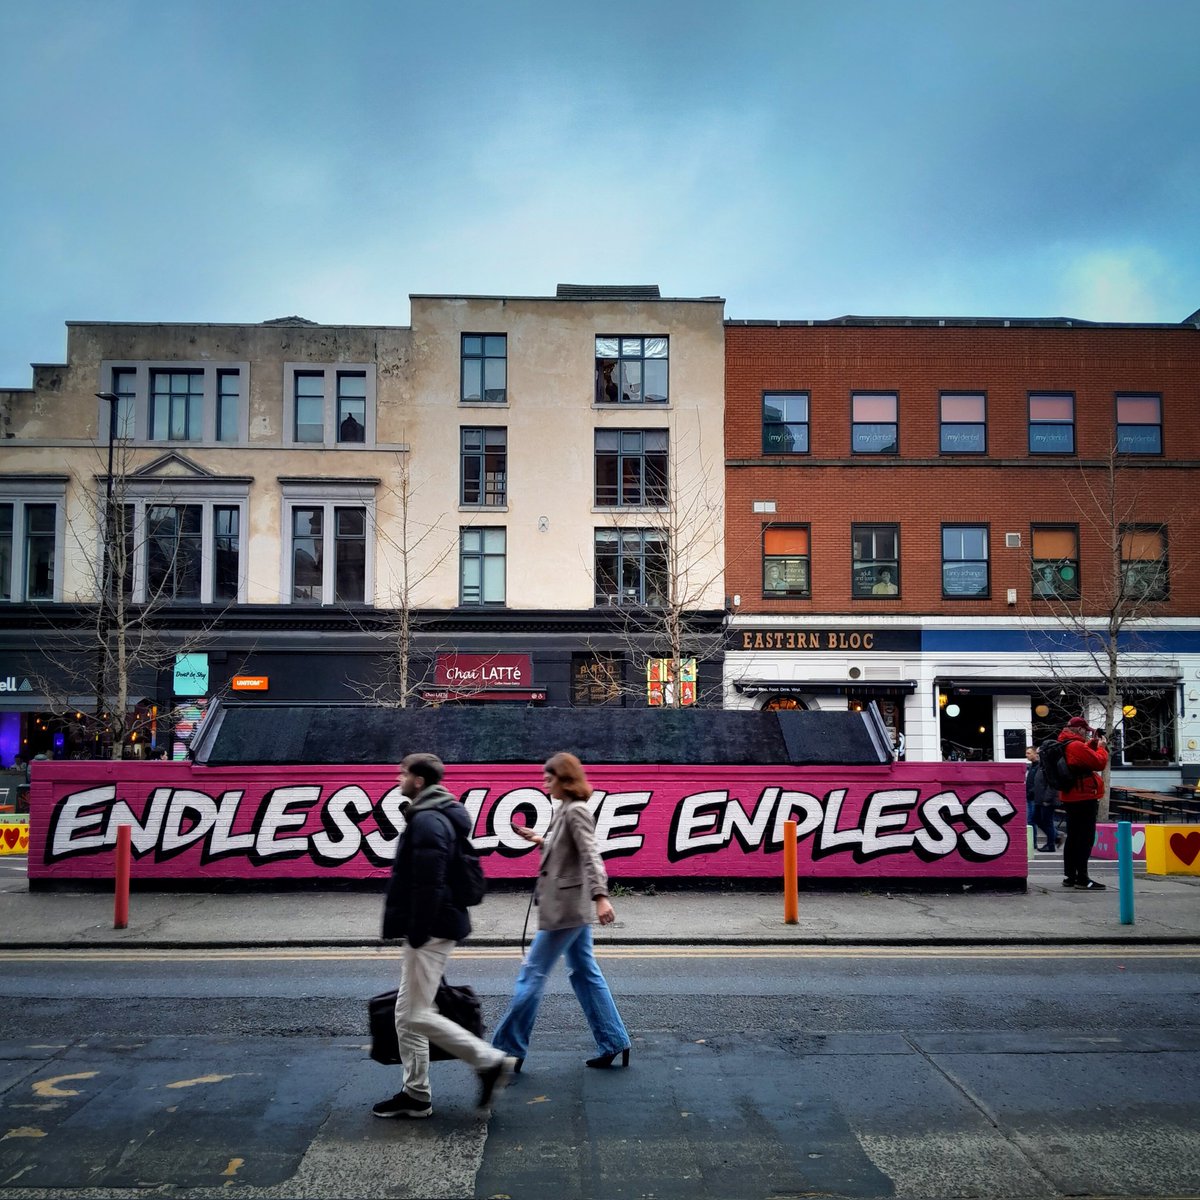 Endless Love
Stephenson Square #NorthernQuarter #Manchester 
By graffiti artist Jay Sharples